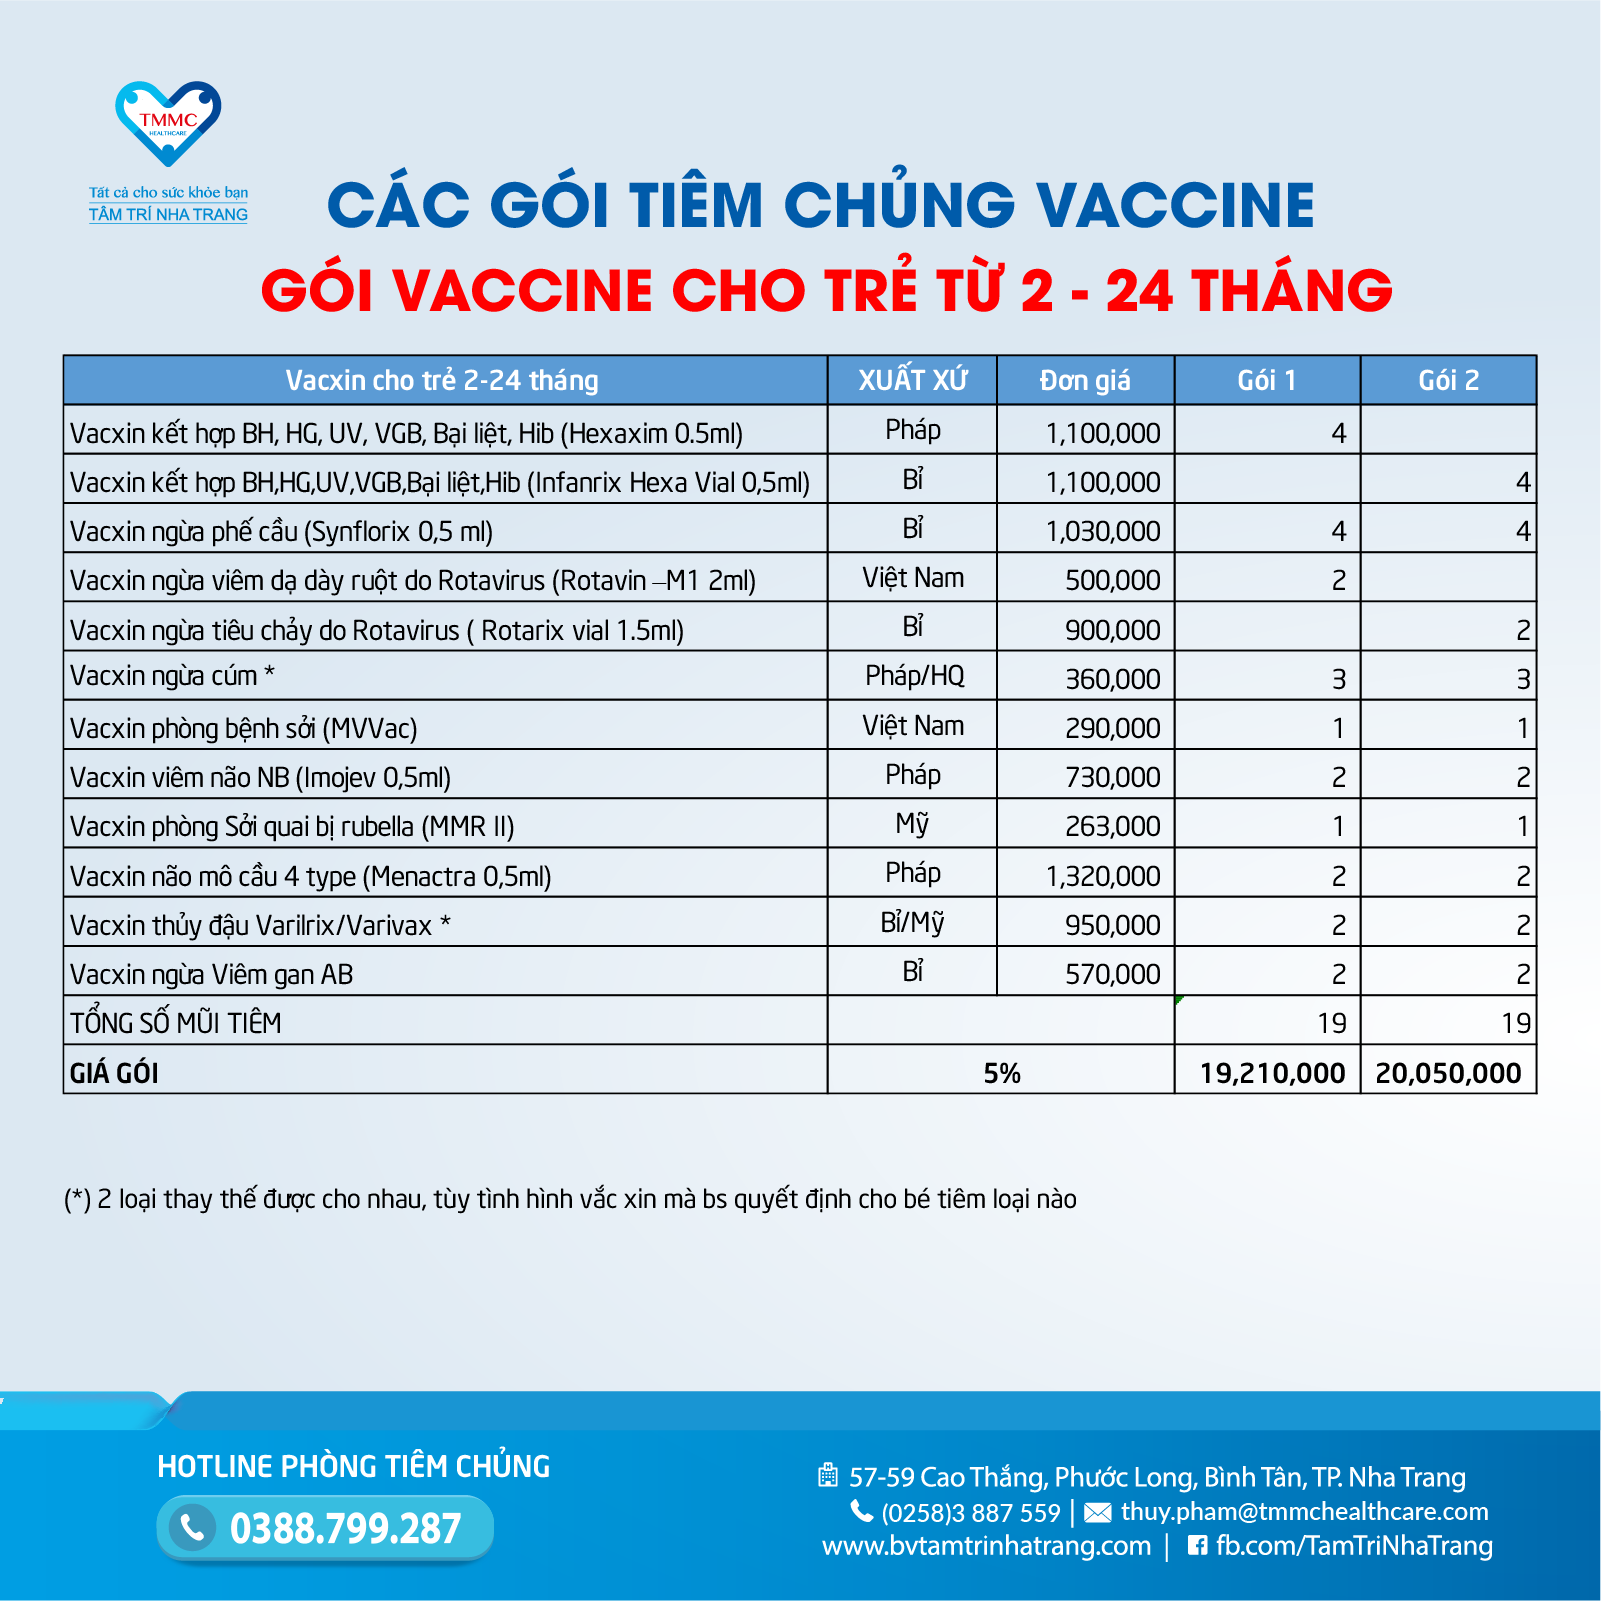 Vaccine-tr-tu-2-24-thang